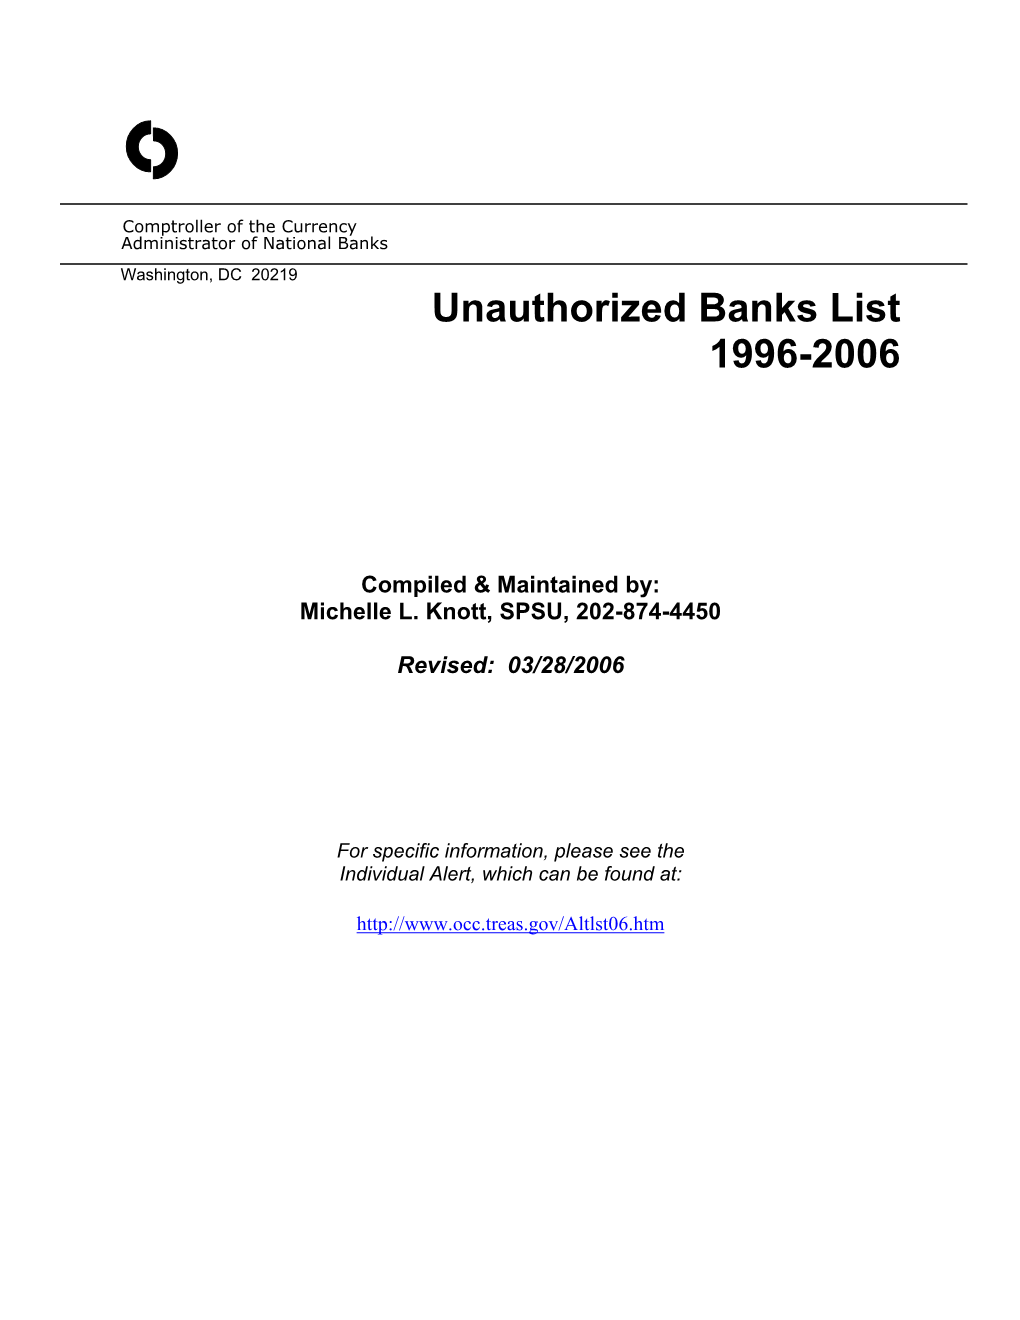 Unauthorized Banks List 1996-2006